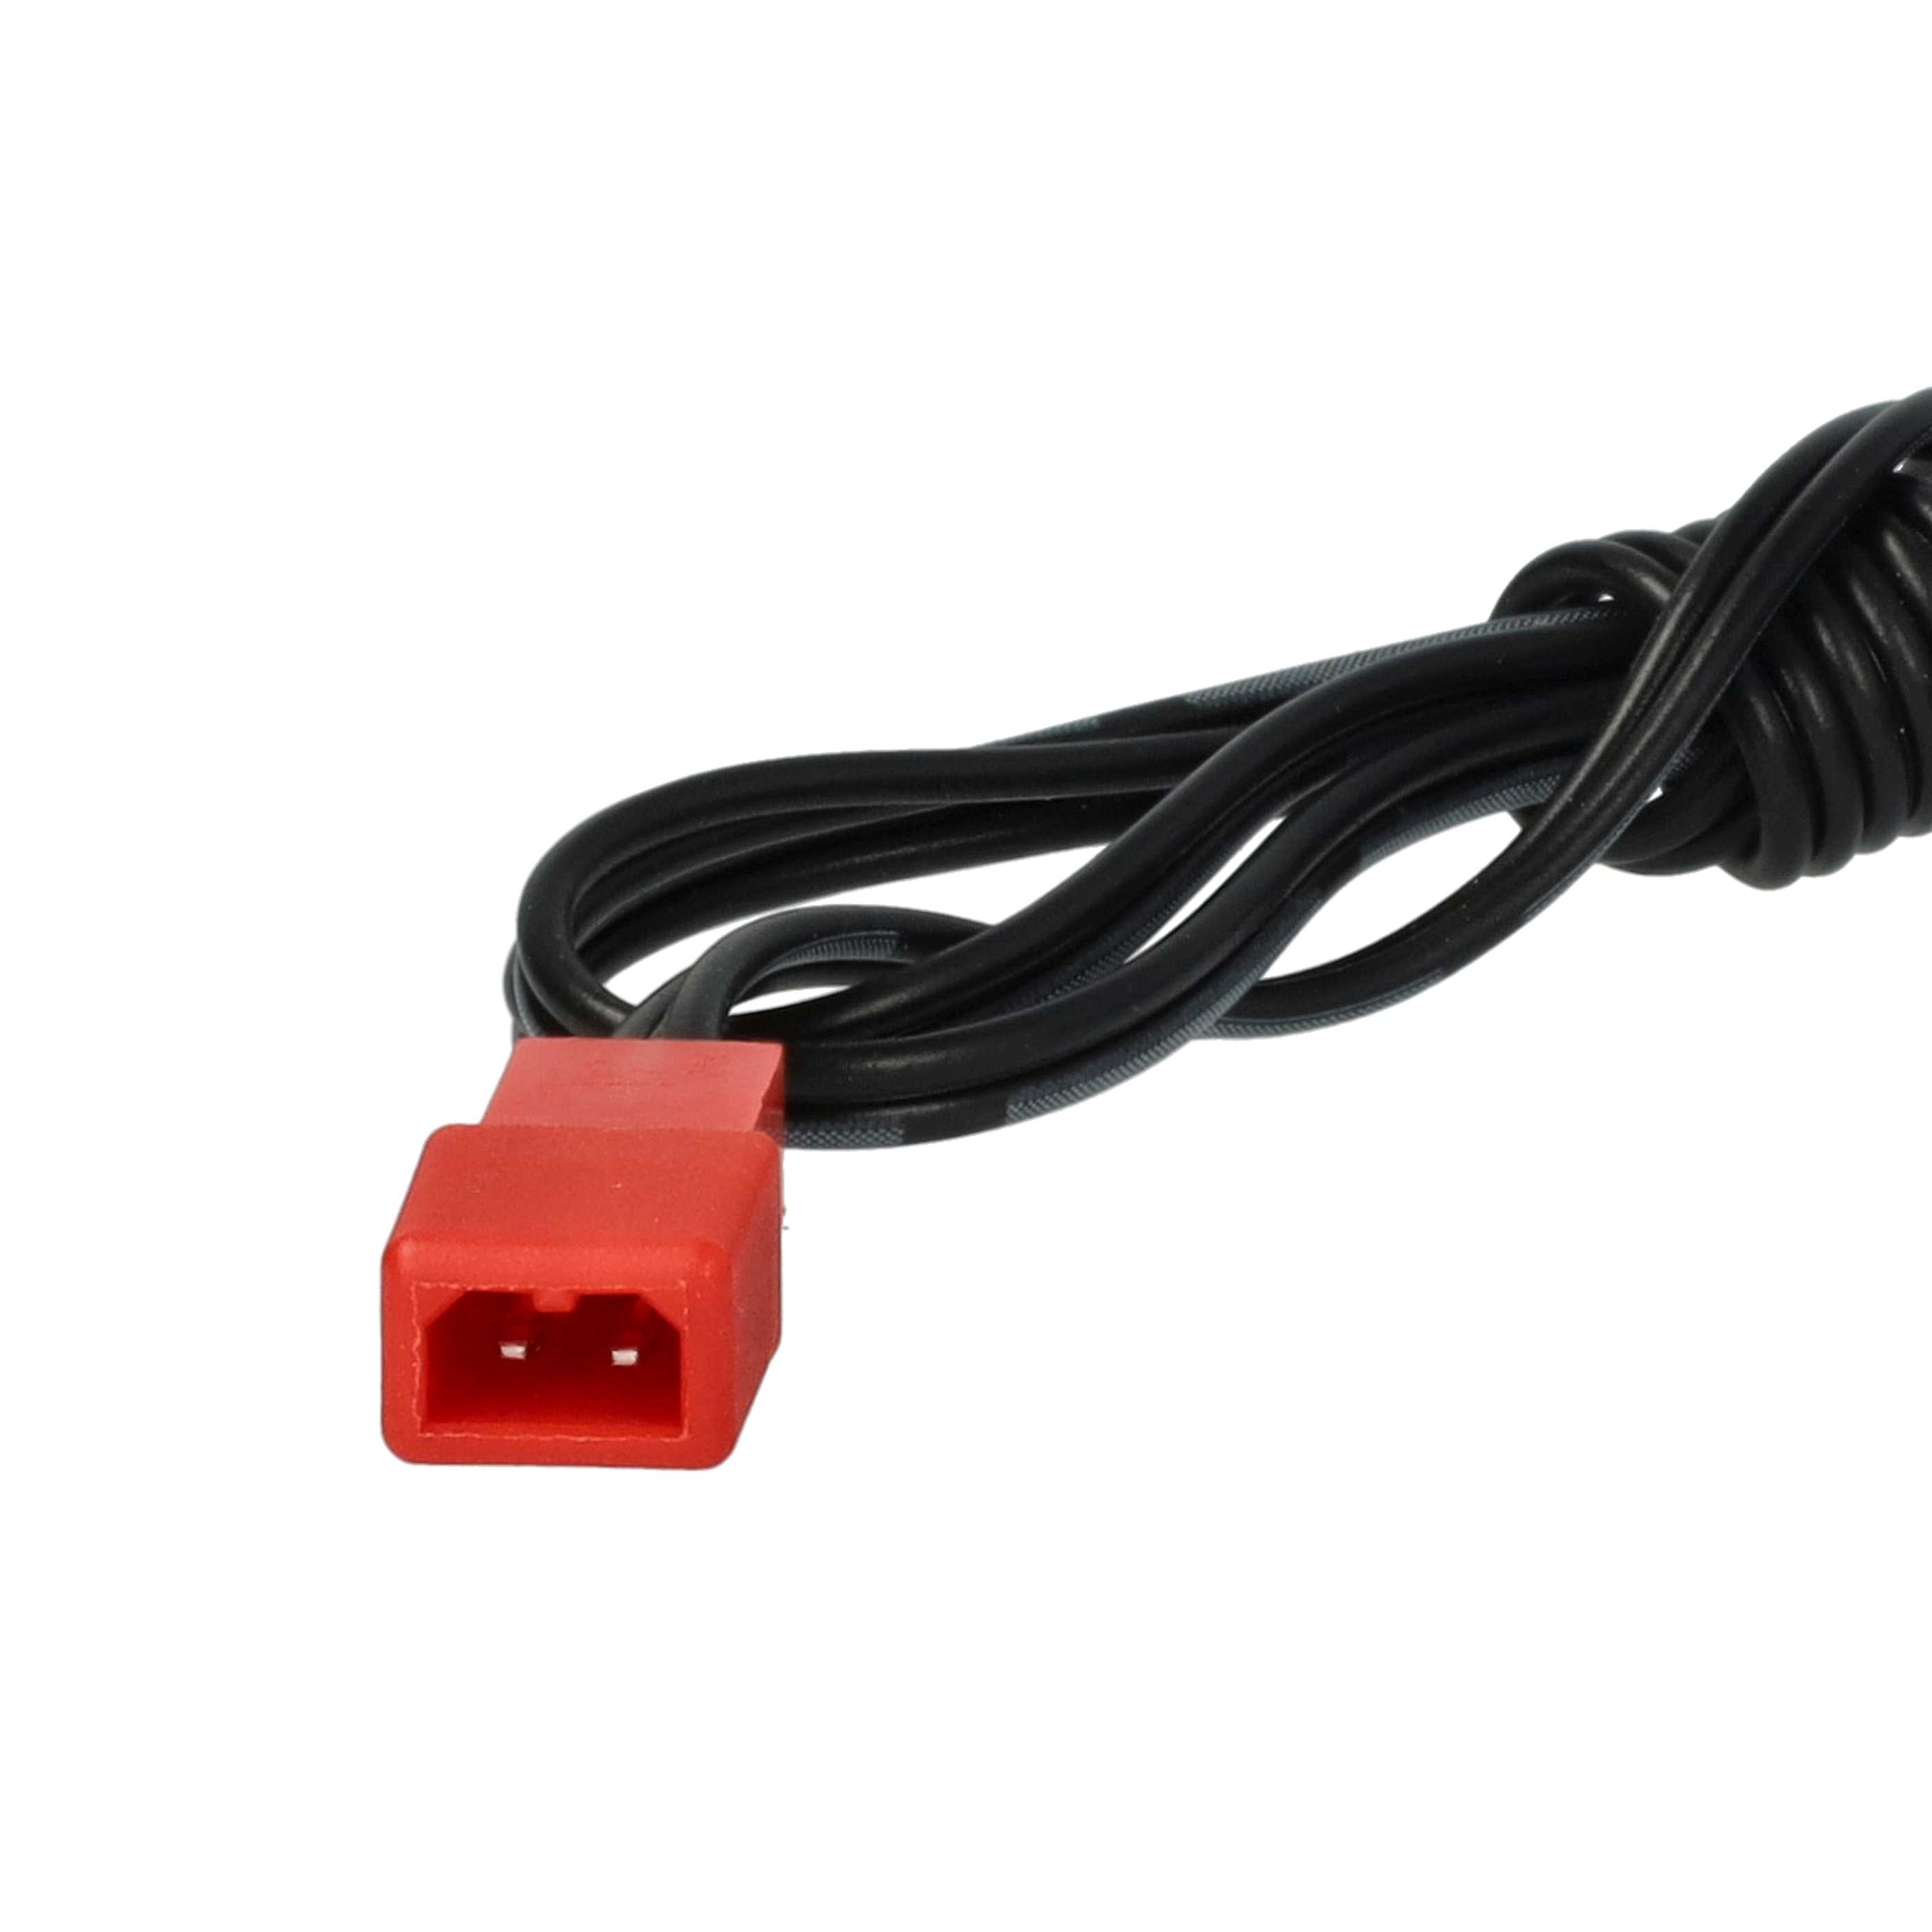 USB-Ladekabel passend für RC-Akkus mit JST-Anschluss, RC-Modellbau Akkupacks - 60cm 6V